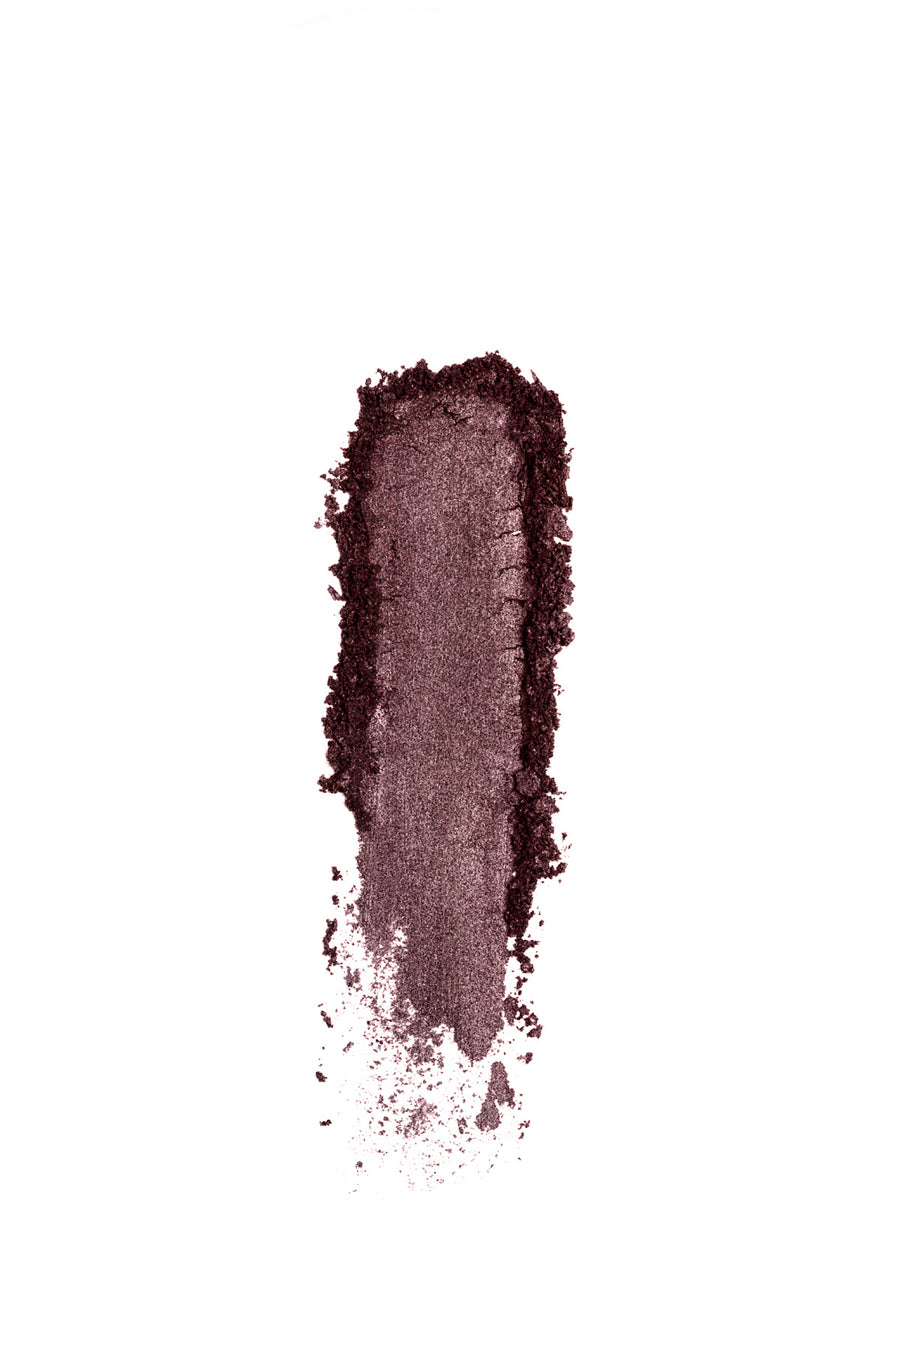 Shimmer Eyeshadow #25 - Purple - Blend Mineral Cosmetics